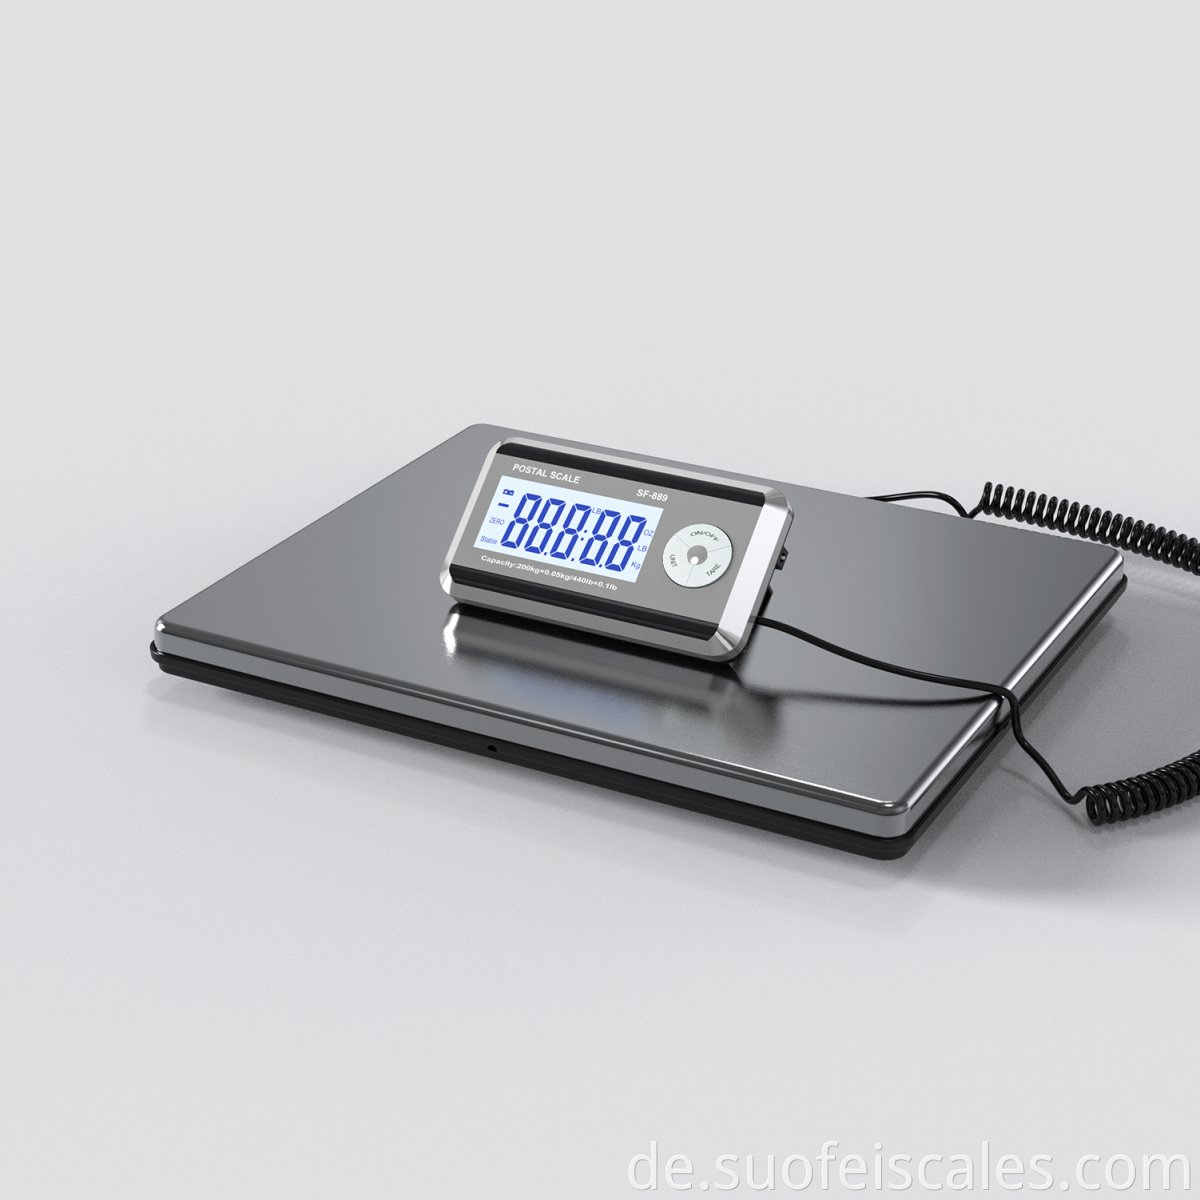 sf-889 200kg Portable Digital Platform Postal Scale Battery